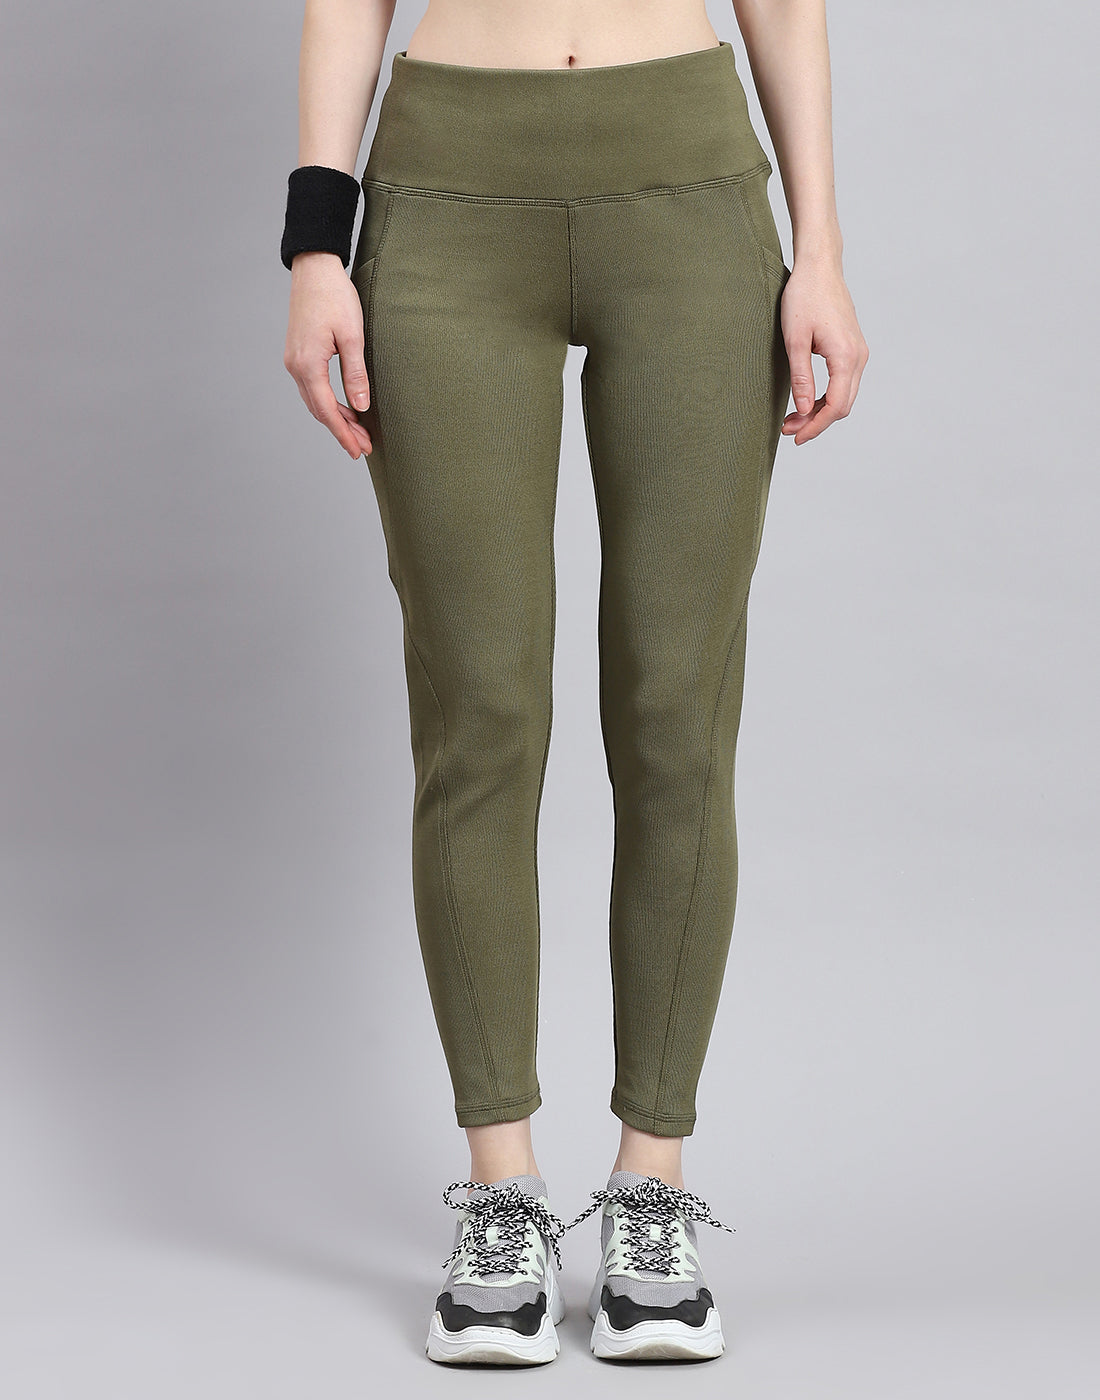 Buy Green Leggings for Women by NIKE Online | Ajio.com